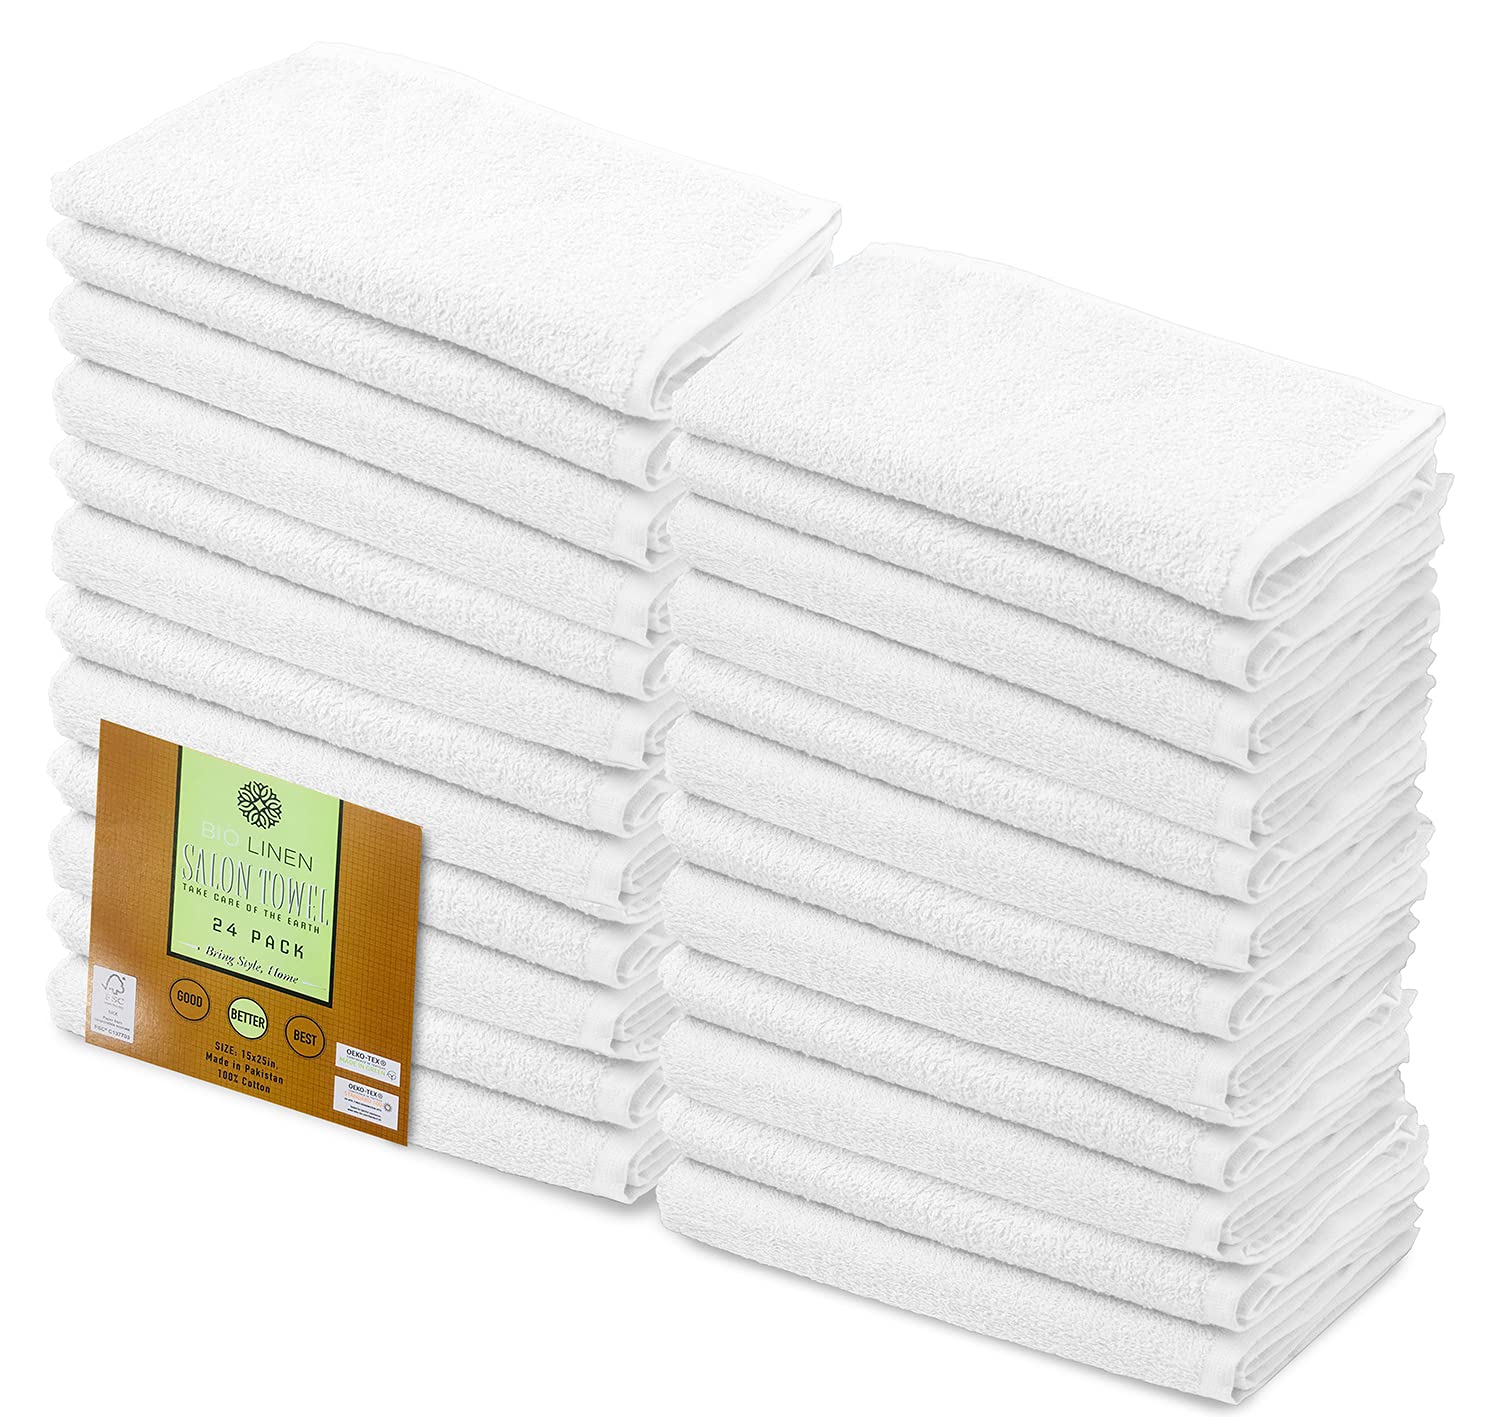 Book Cover Cotton Salon Towels Set - White 15